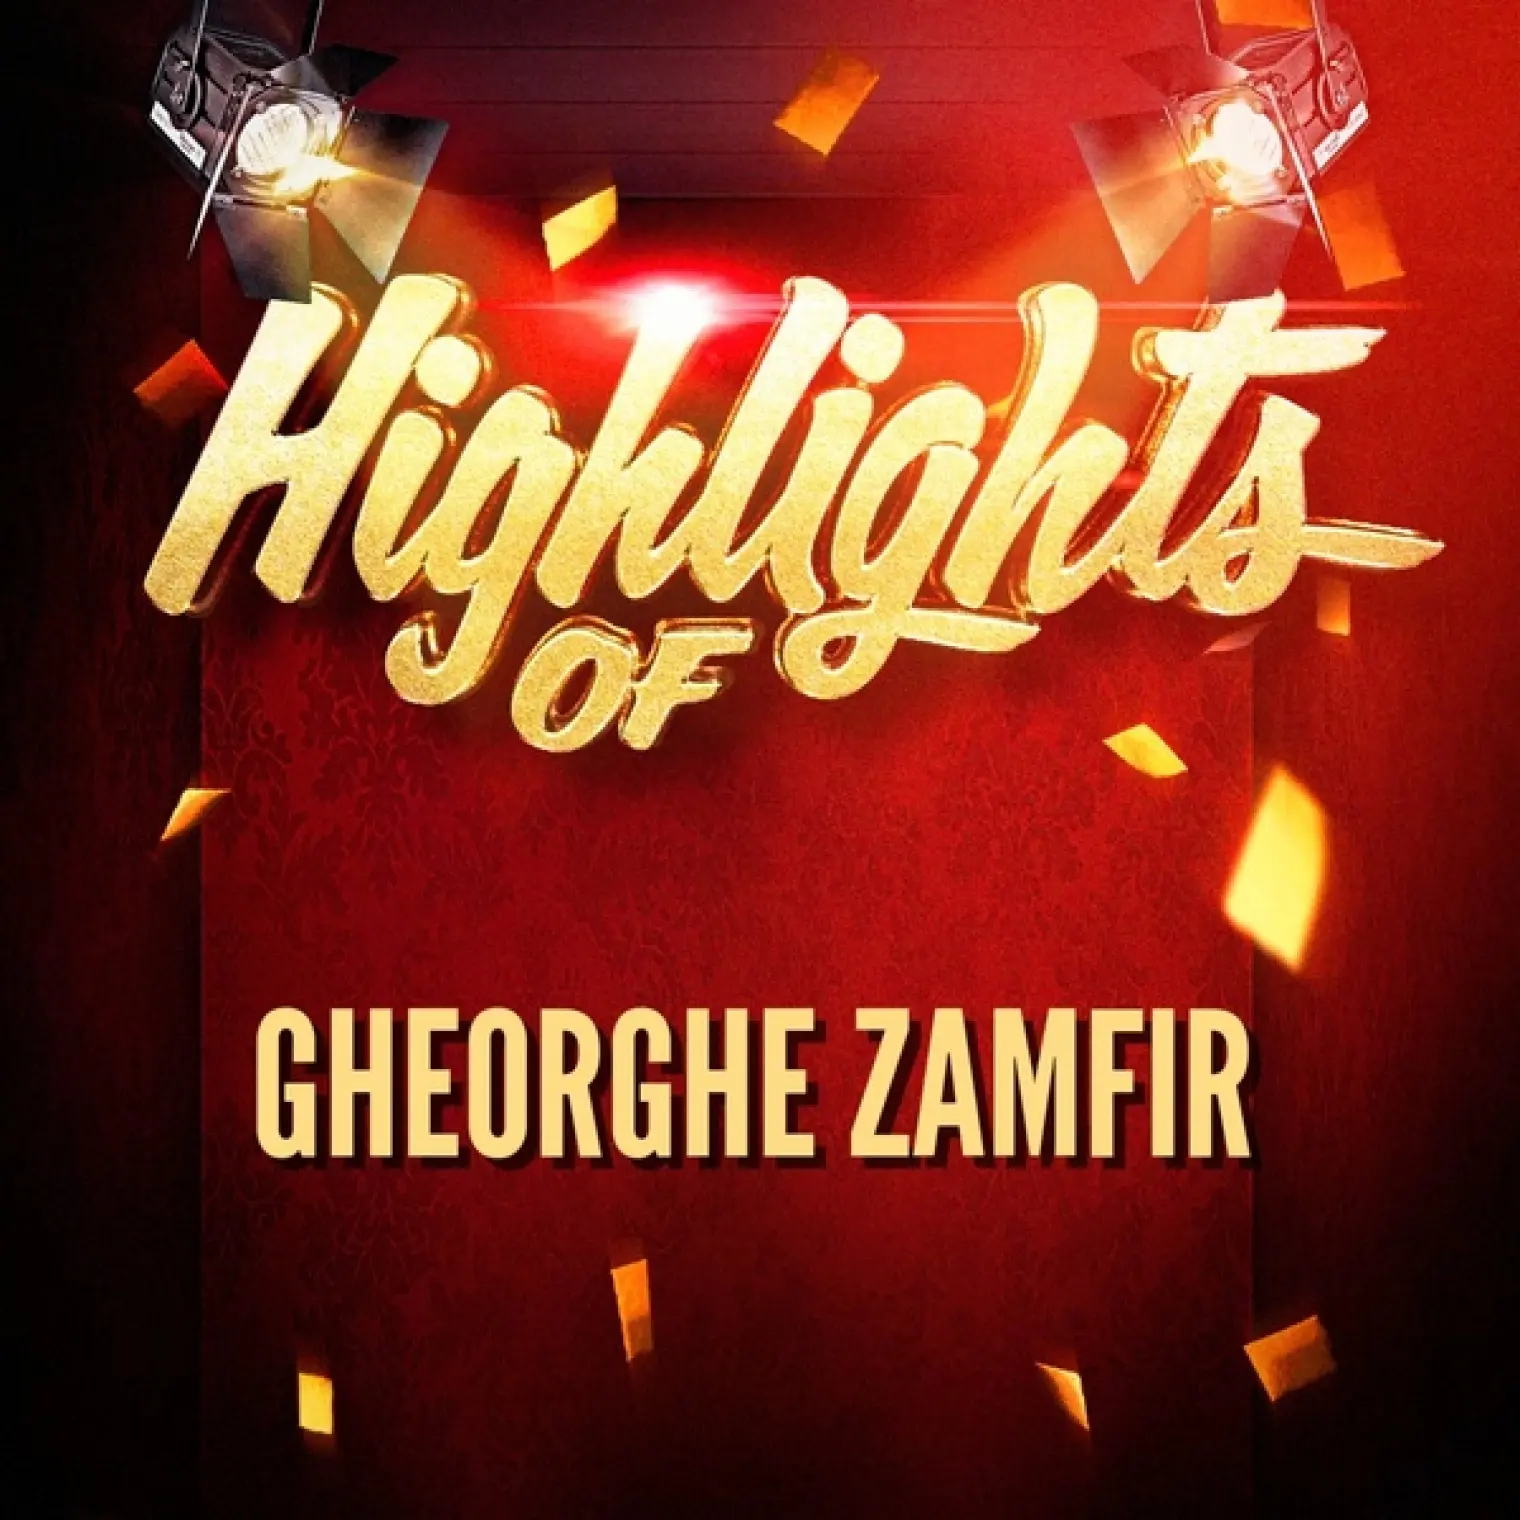 Highlights of Gheorghe Zamfir -  Gheorghe Zamfir 